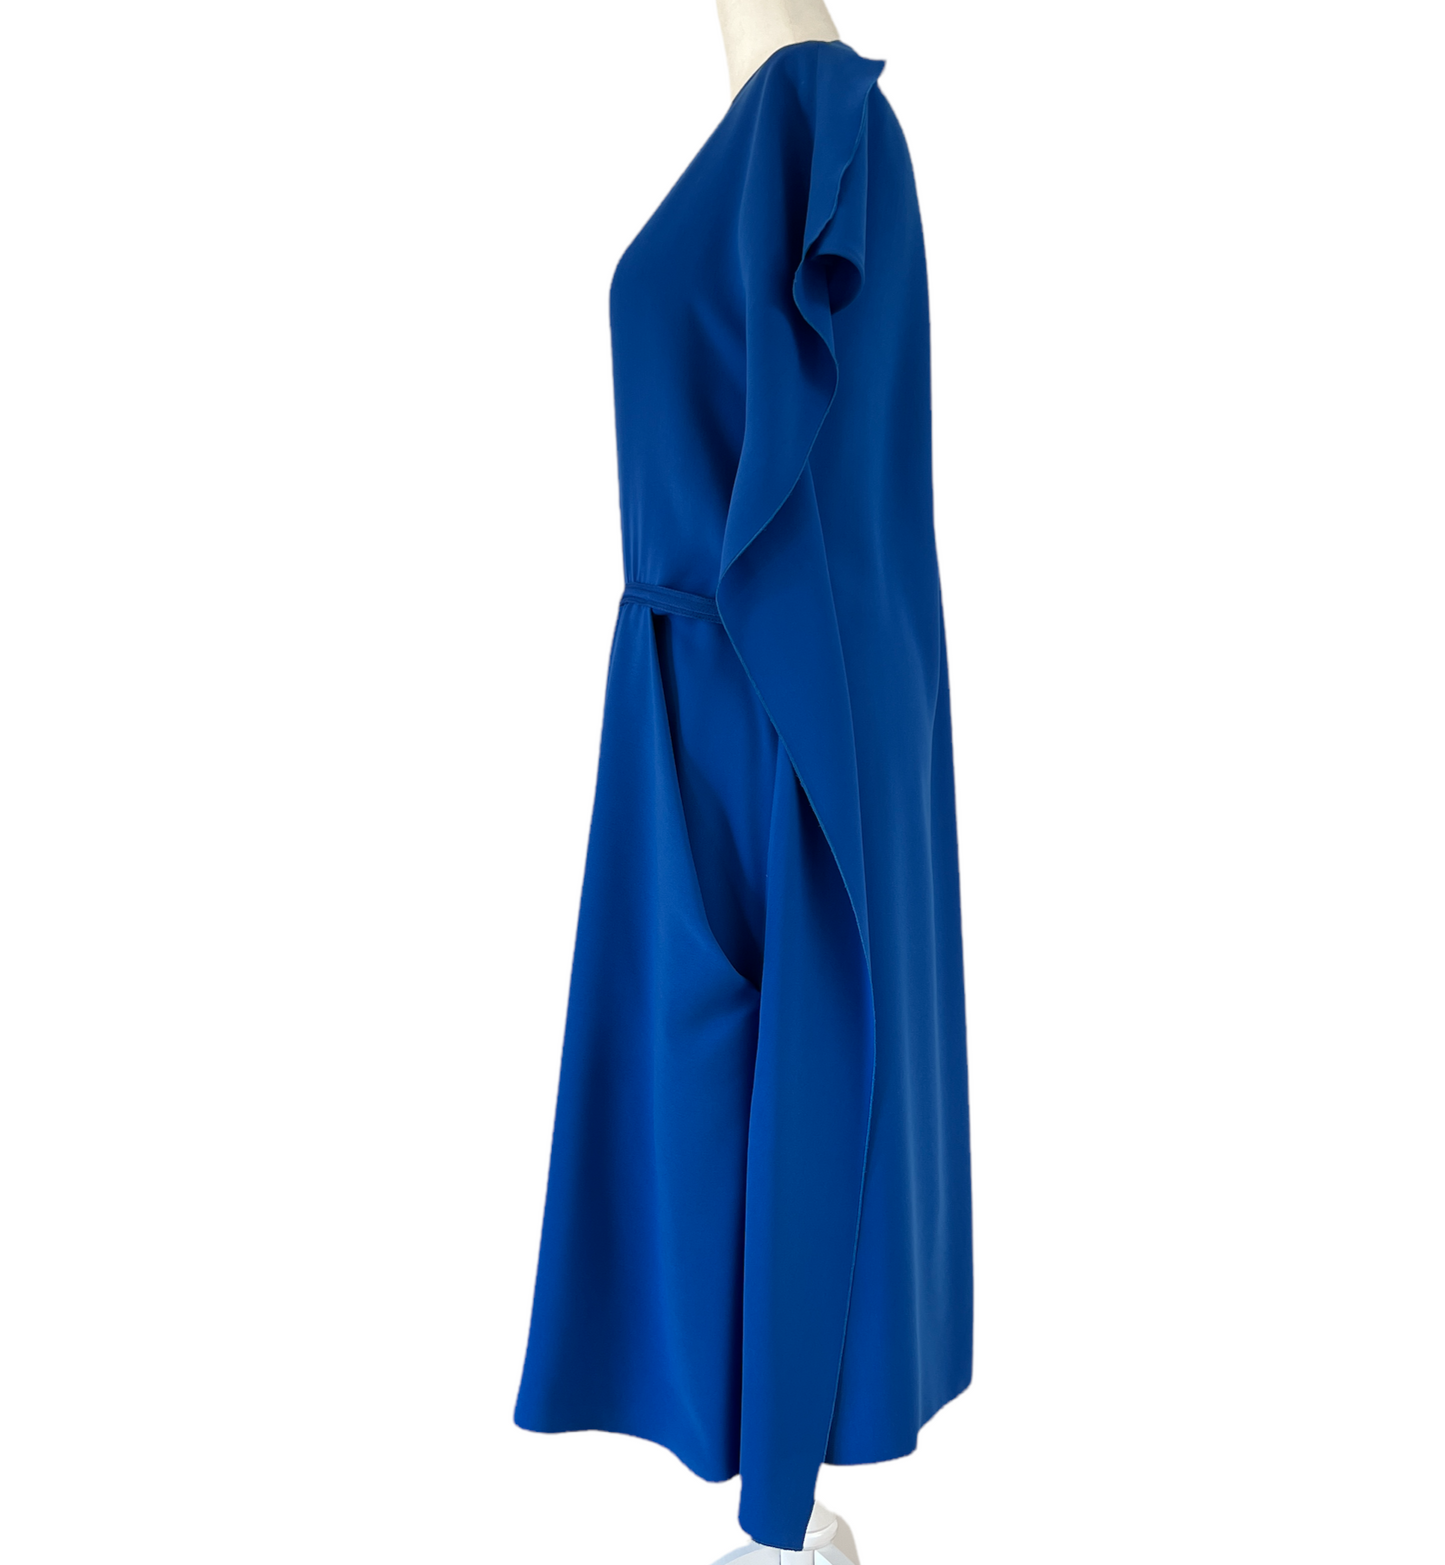 Blue Dress - 6